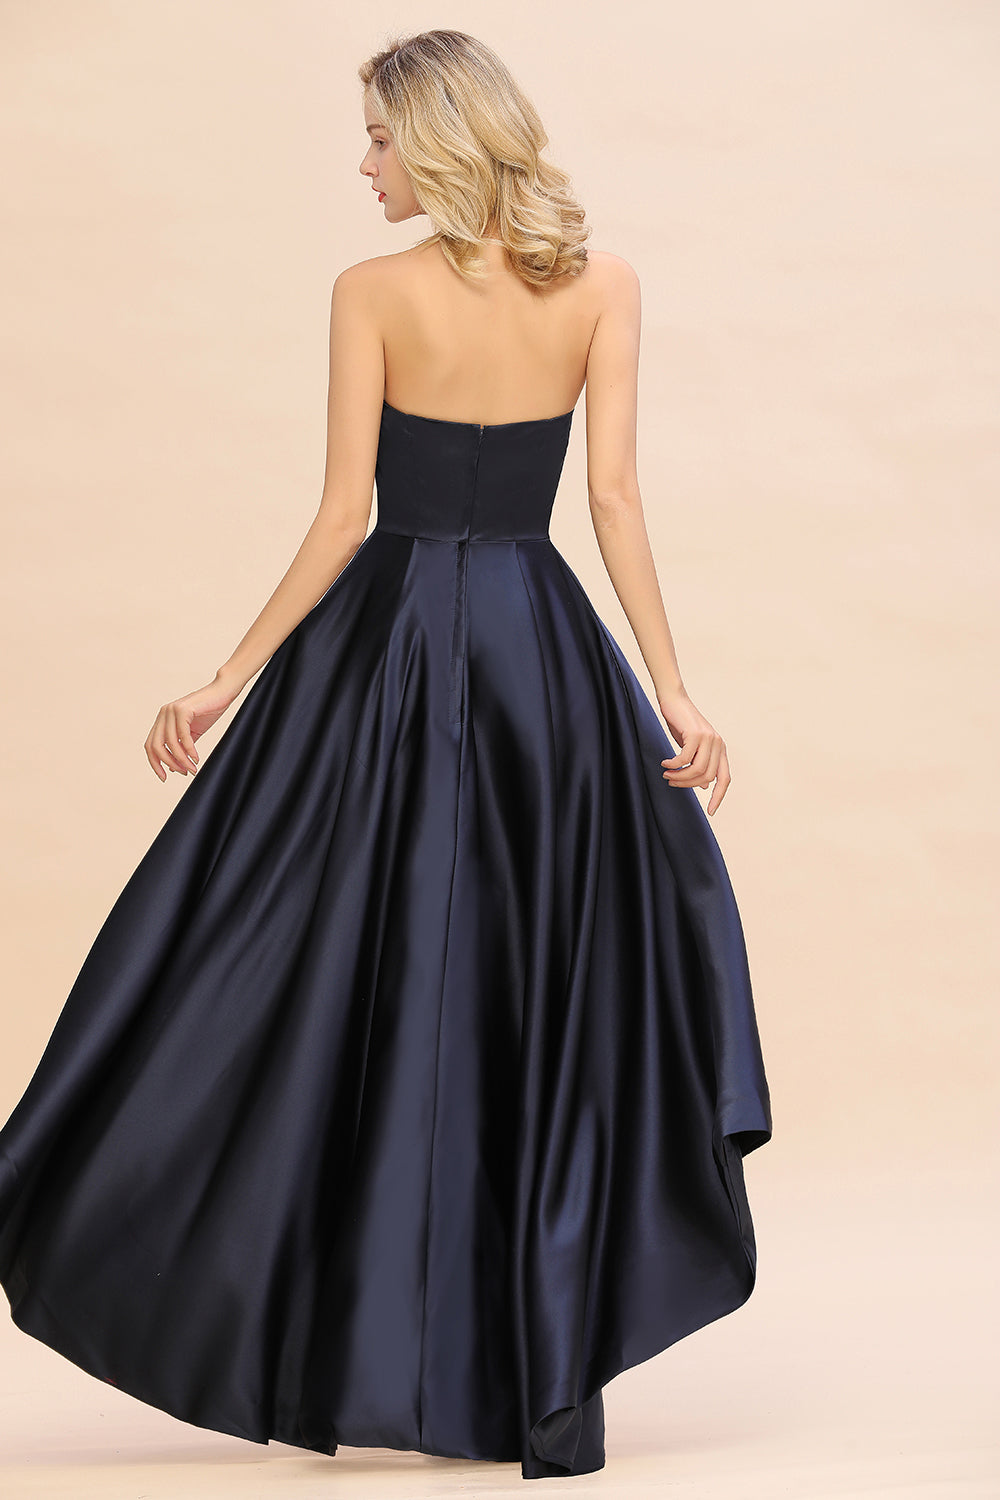 Affordable Hi-Lo Strapless Satin Bridesmaid dresses Online-27dress